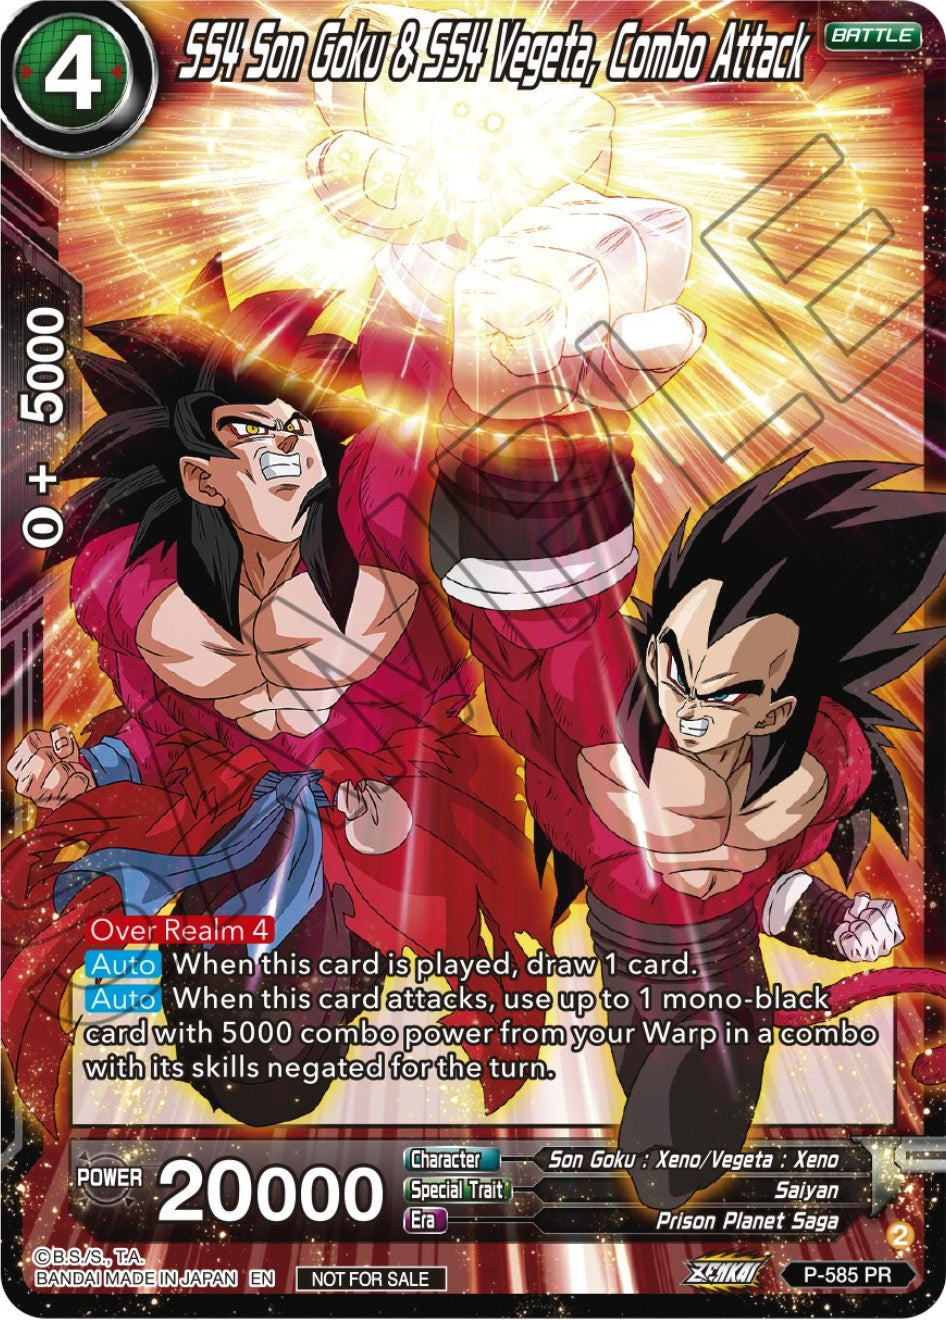 SS4 Son Goku & SS4 Vegeta, Combo Attack (Zenkai Series Tournament Pack Vol.7) (P-585) [Tournament Promotion Cards] | Pegasus Games WI